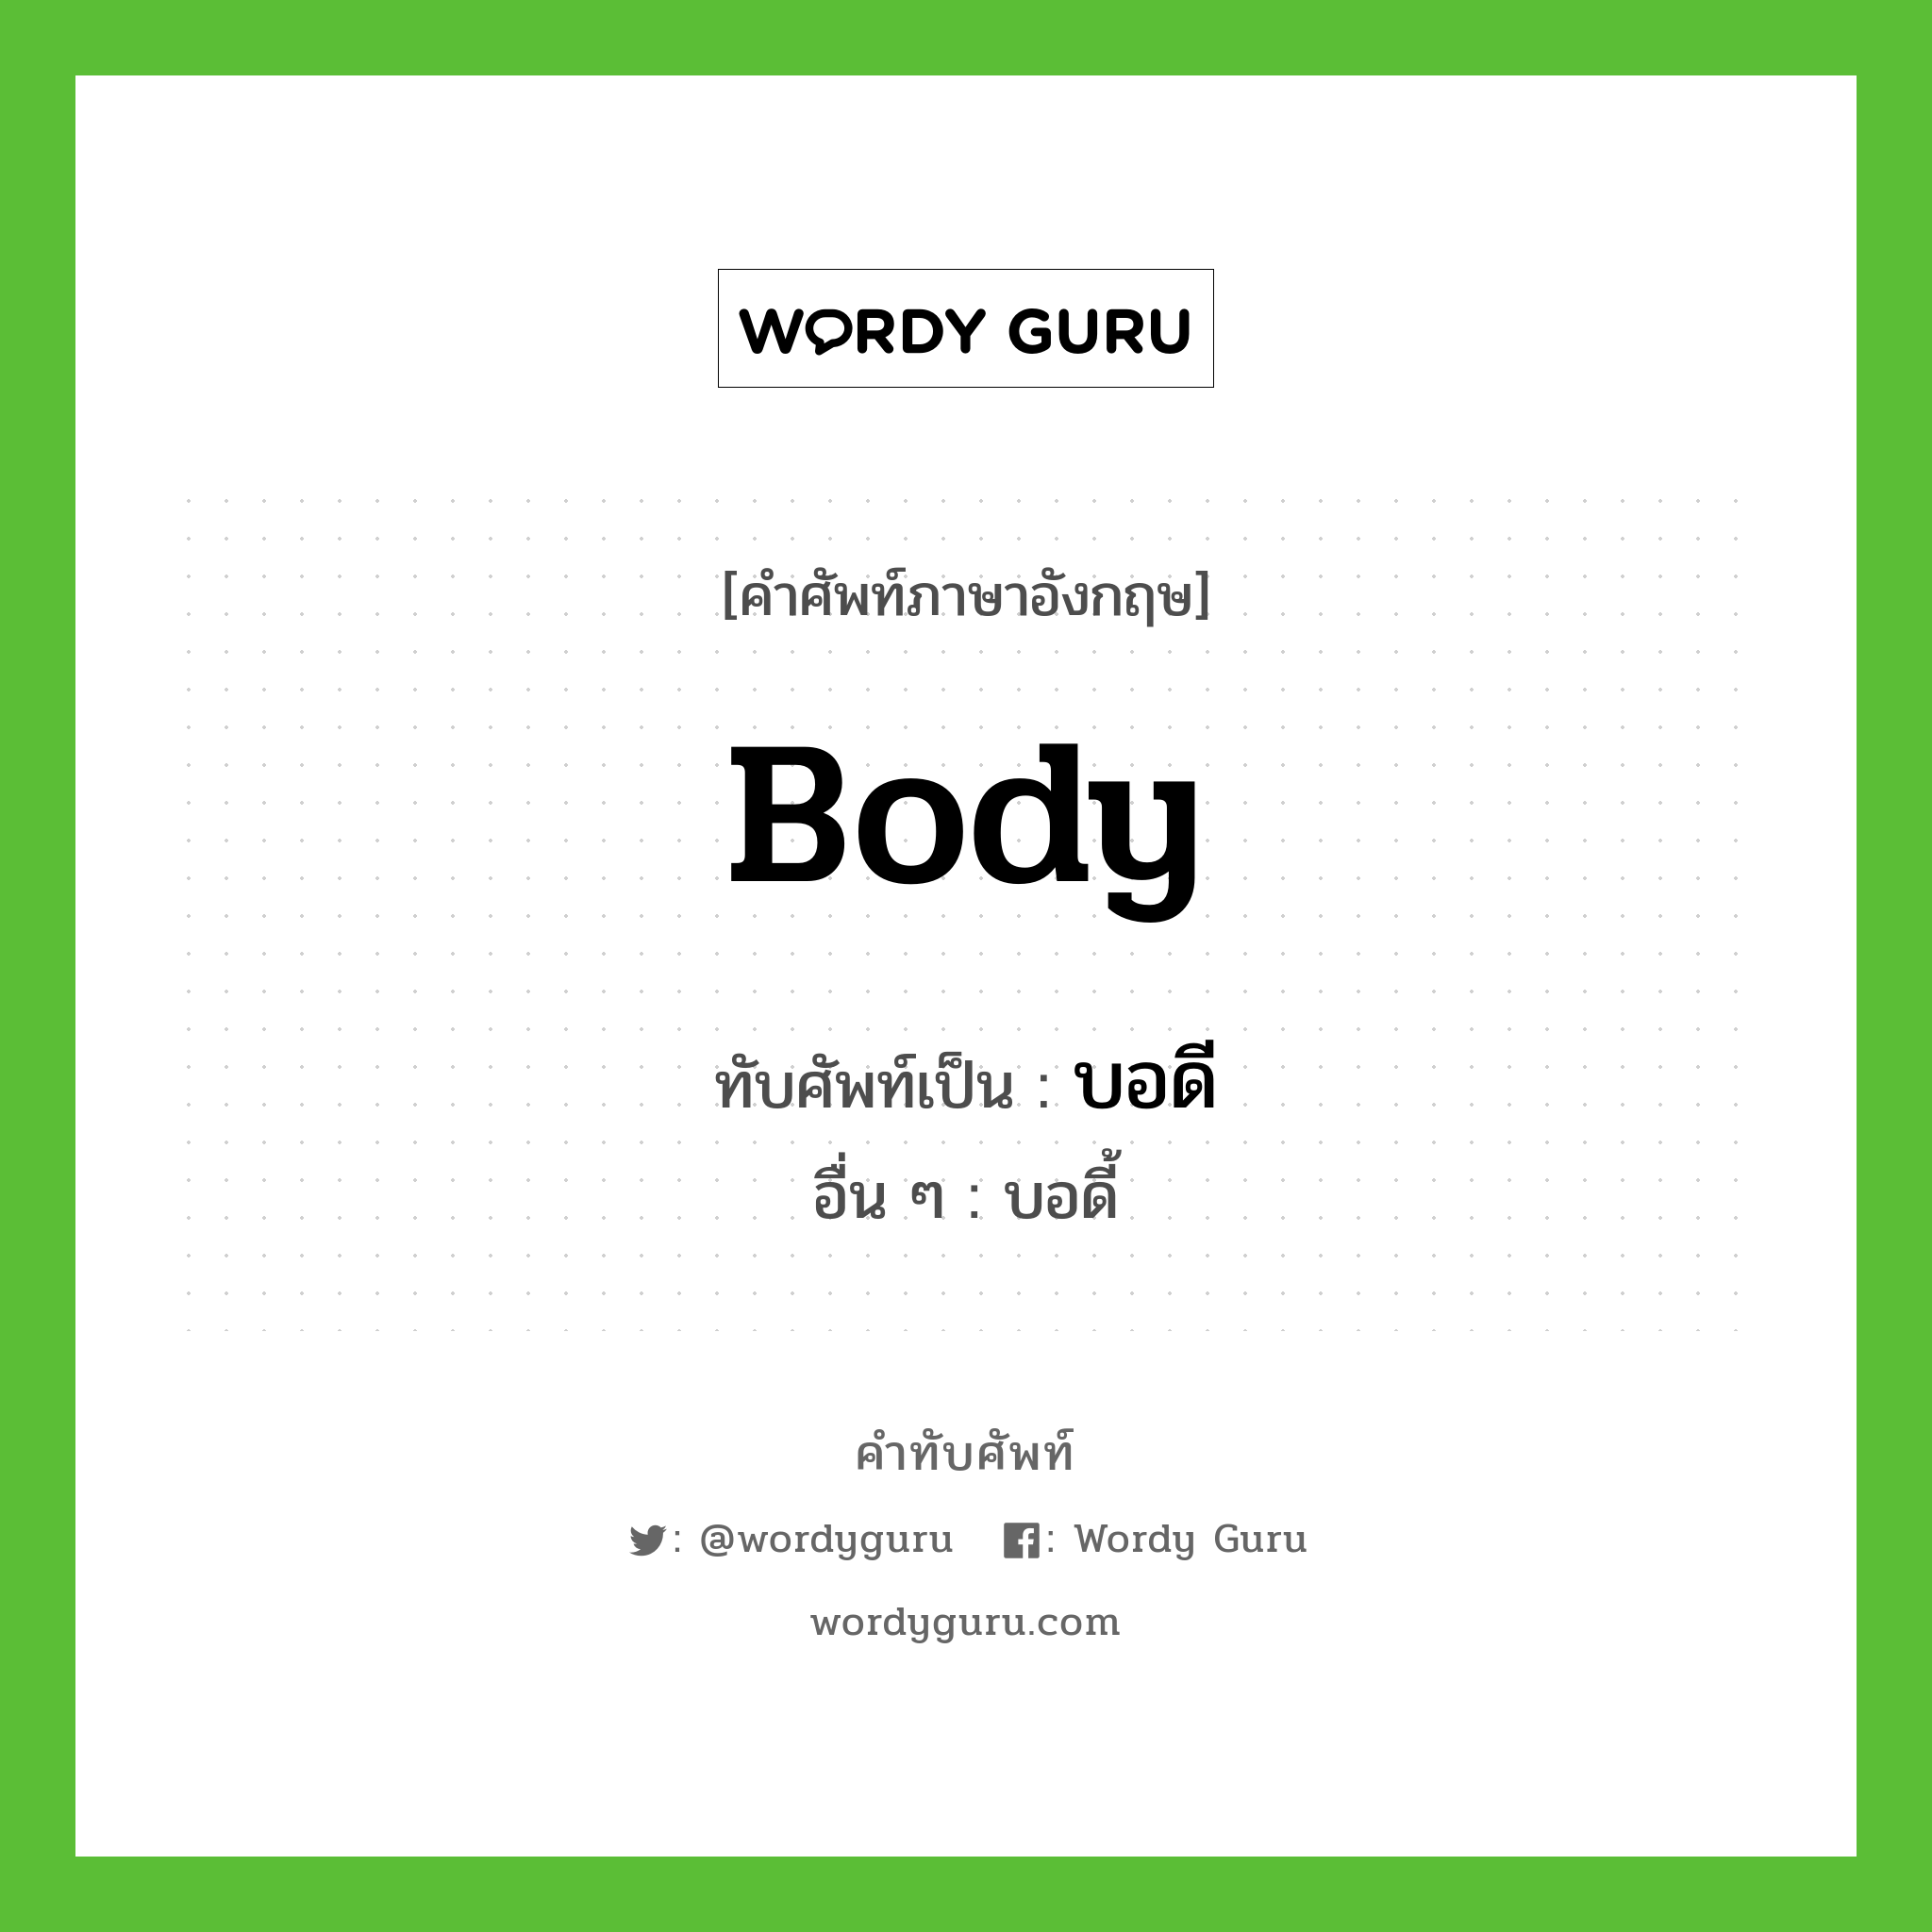 body เขียนเป็นคำไทยว่าอะไร?, คำศัพท์ภาษาอังกฤษ body ทับศัพท์เป็น บอดี อื่น ๆ บอดี้